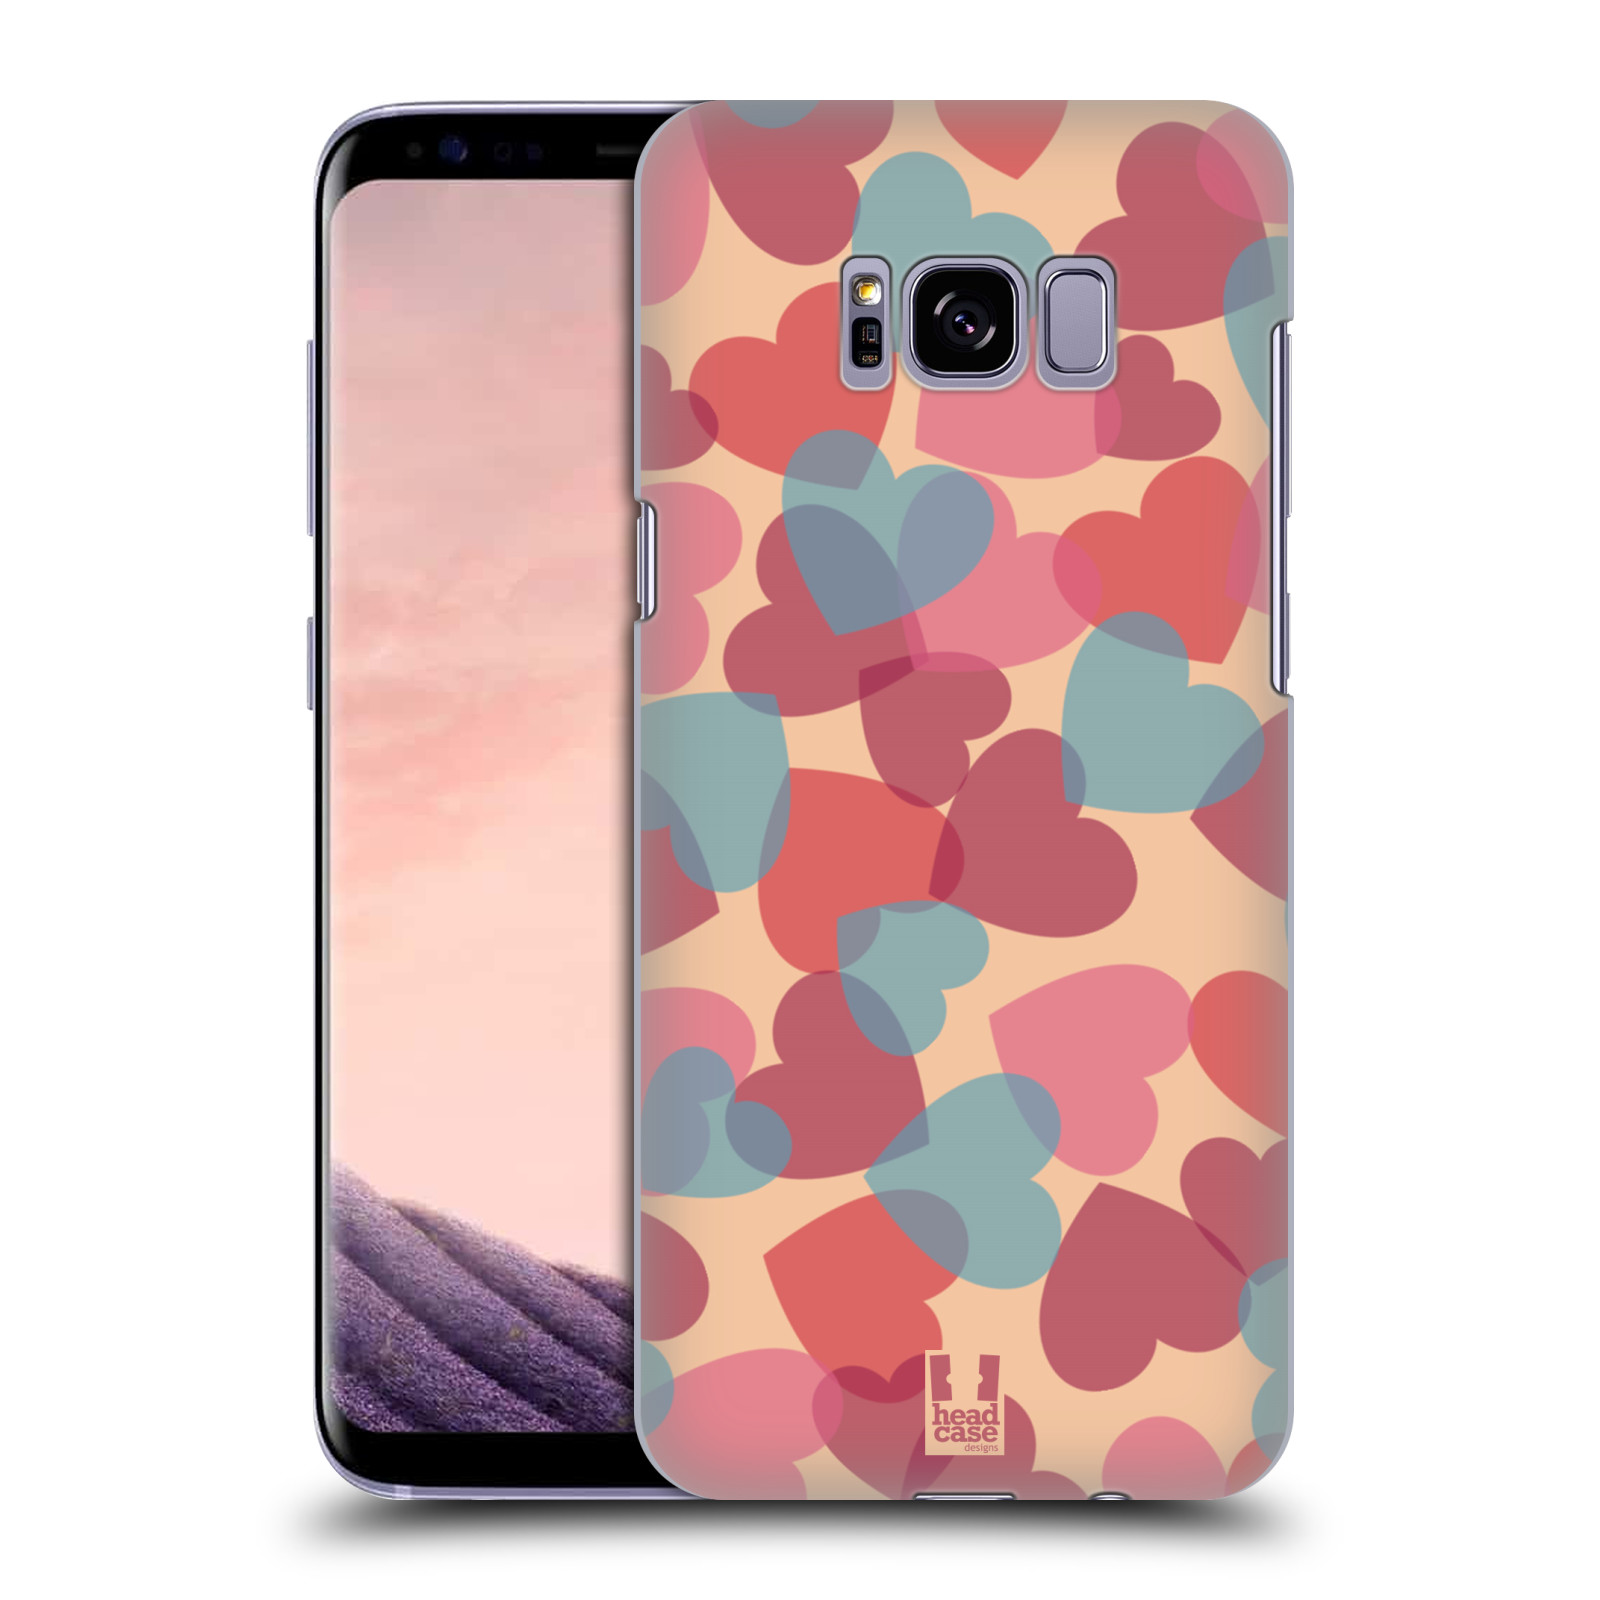 Zadní obal pro mobil Samsung Galaxy S8 PLUS - HEAD CASE - Růžová srdíčka kreslený vzor